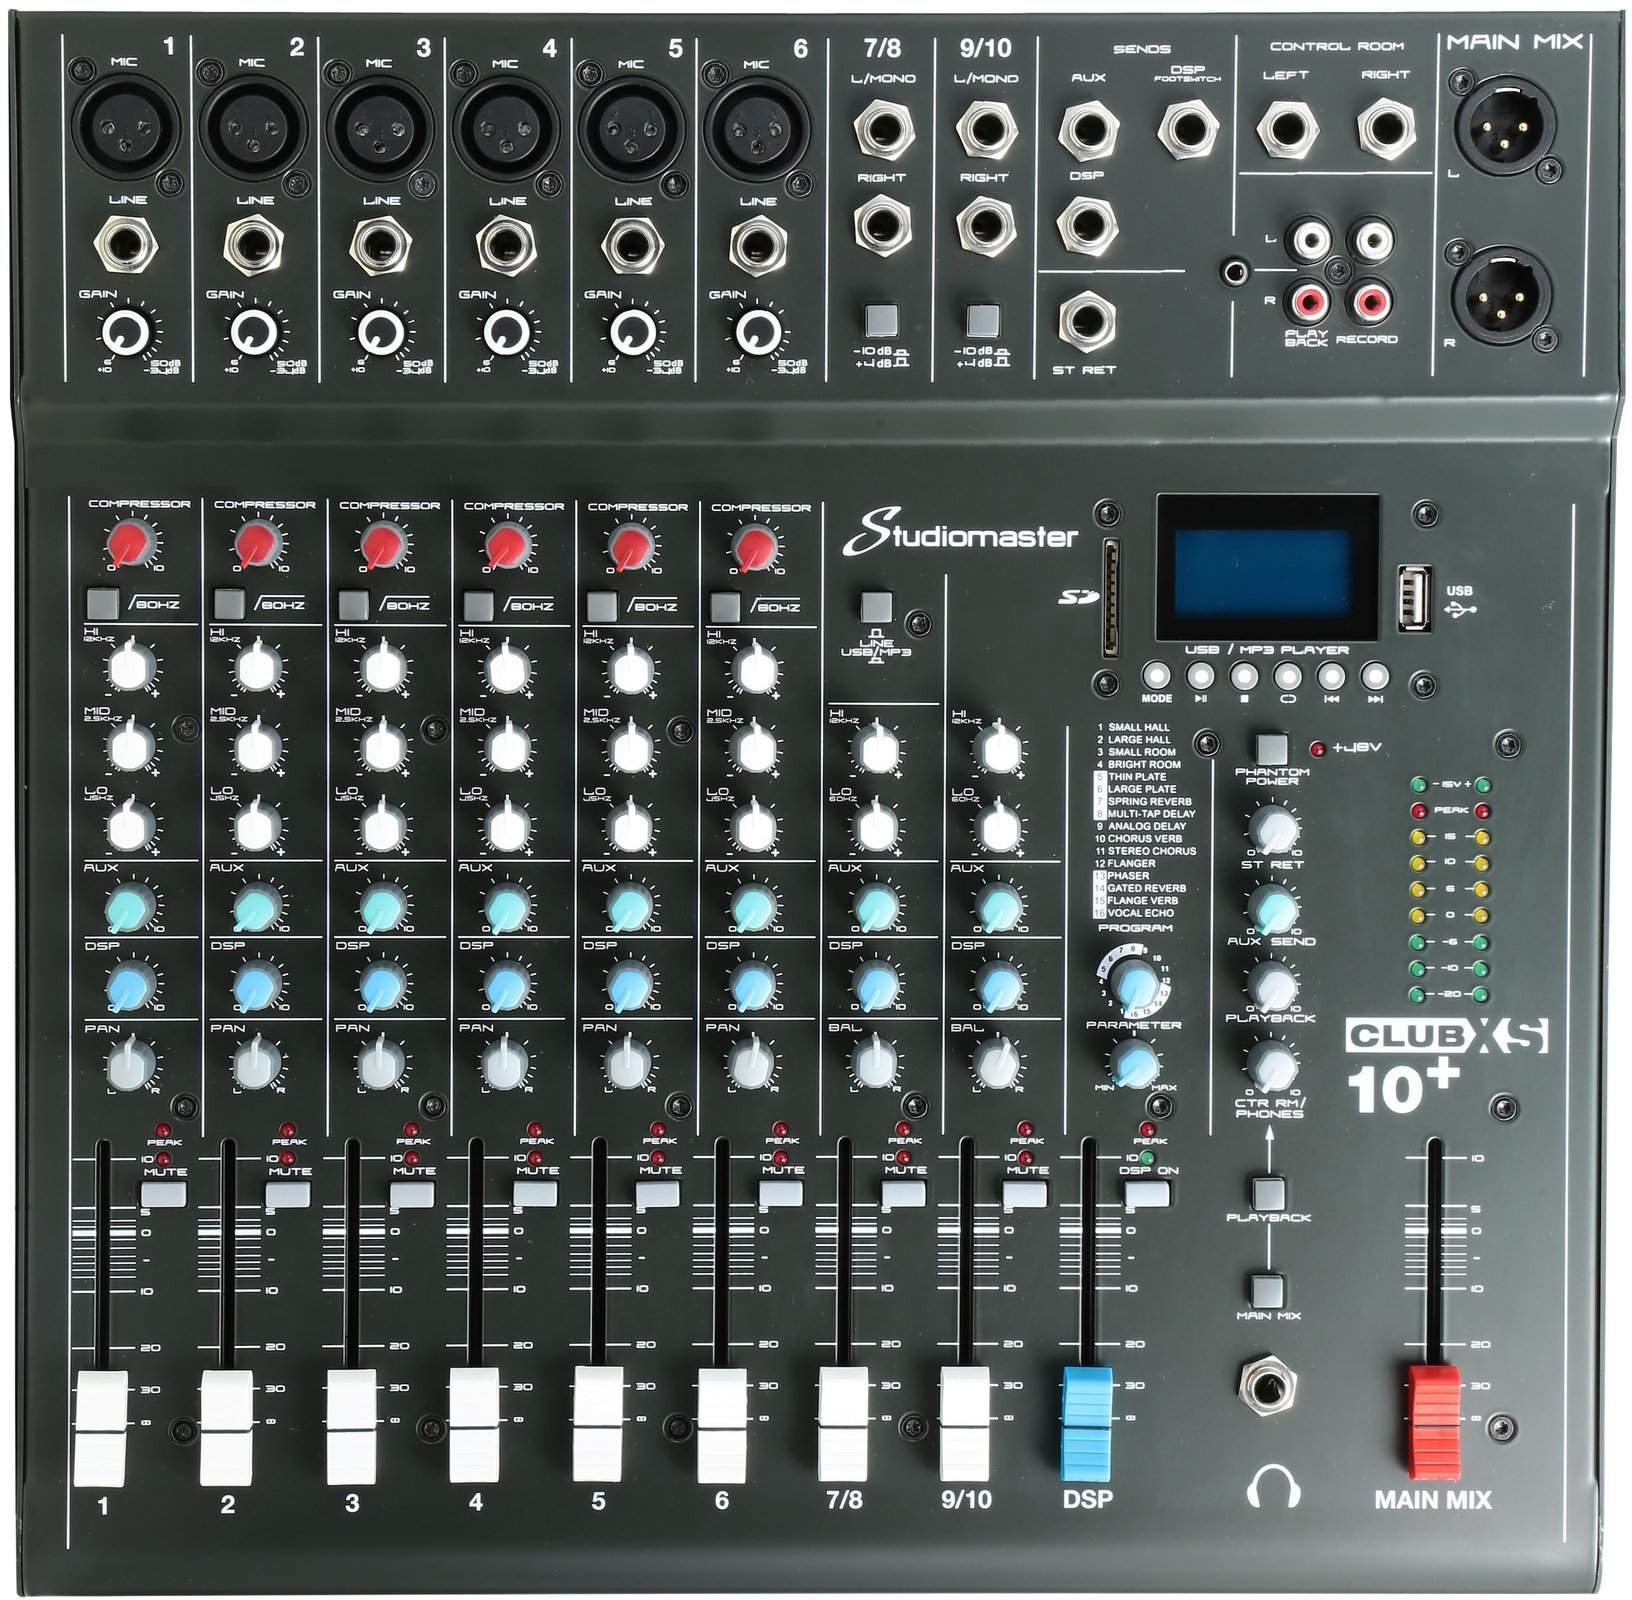 Table de mixage analogique Studiomaster Club XS10+